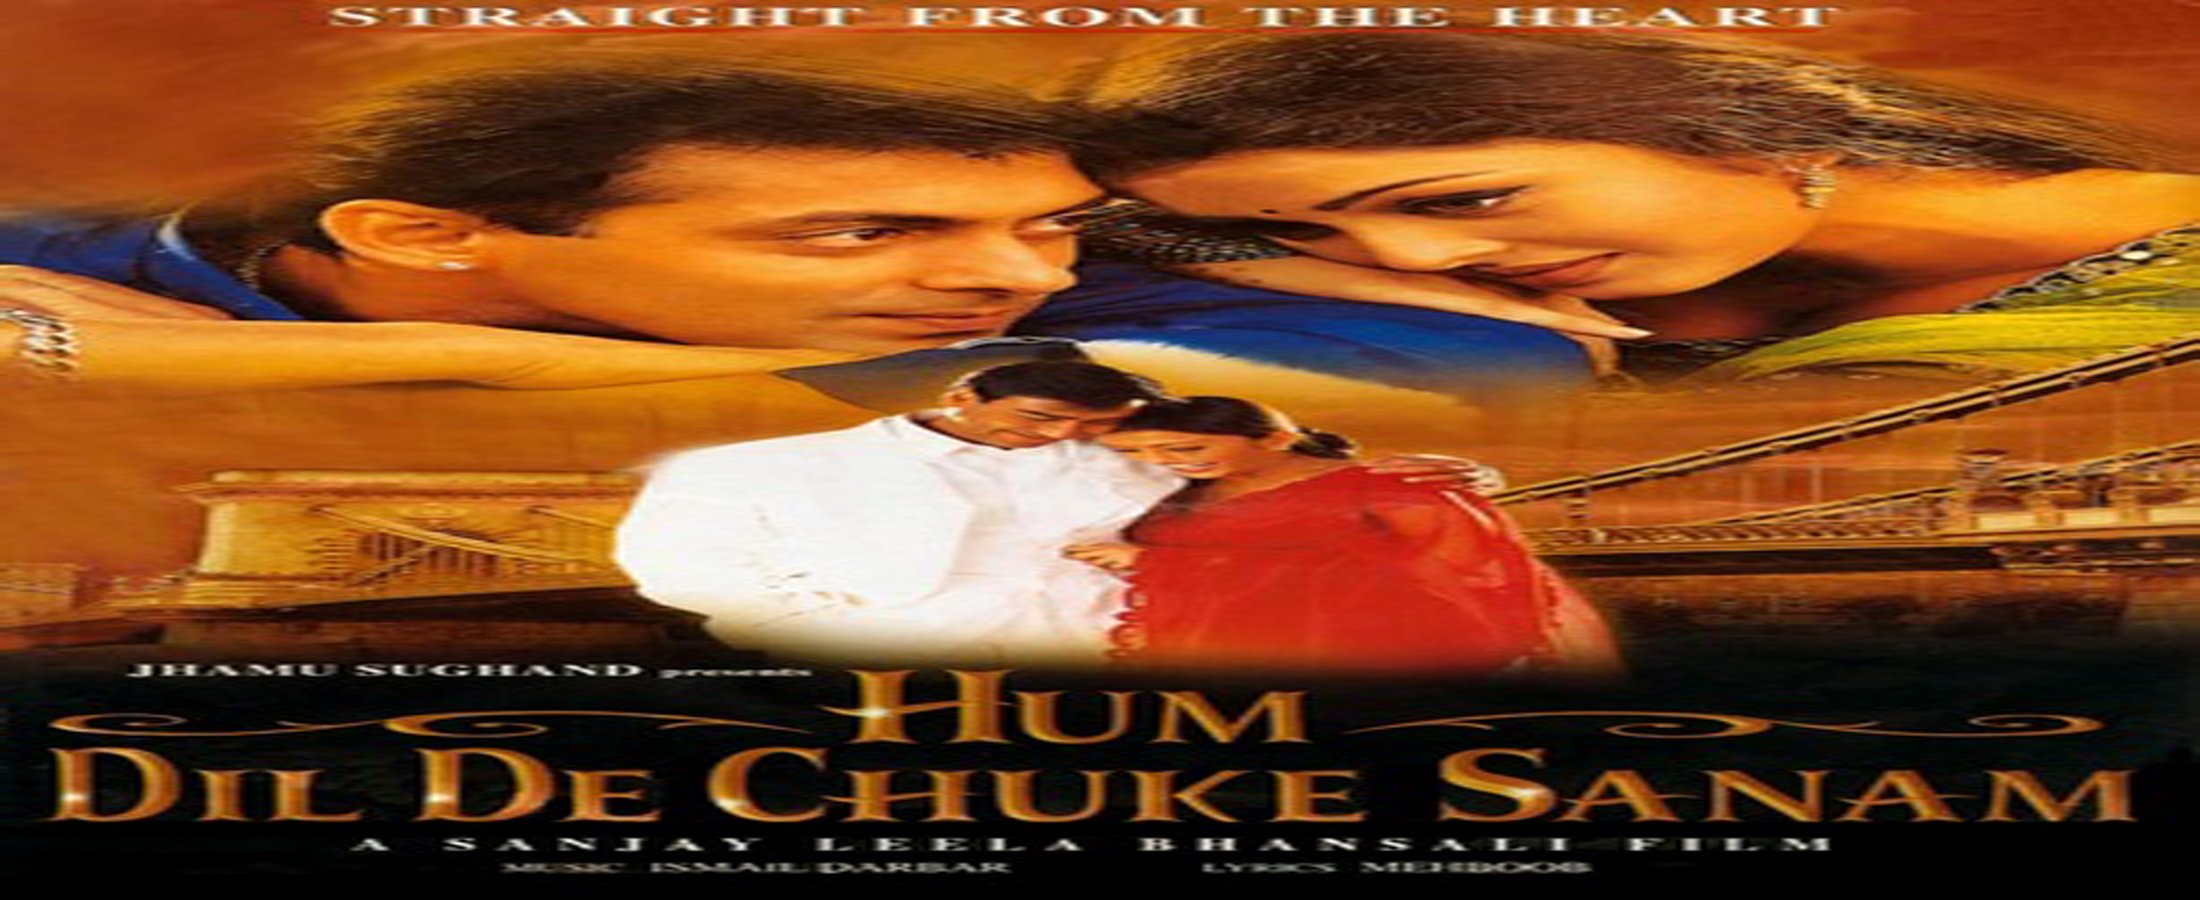 Hum Dil De Chuke Sanam marathi movie utorrent